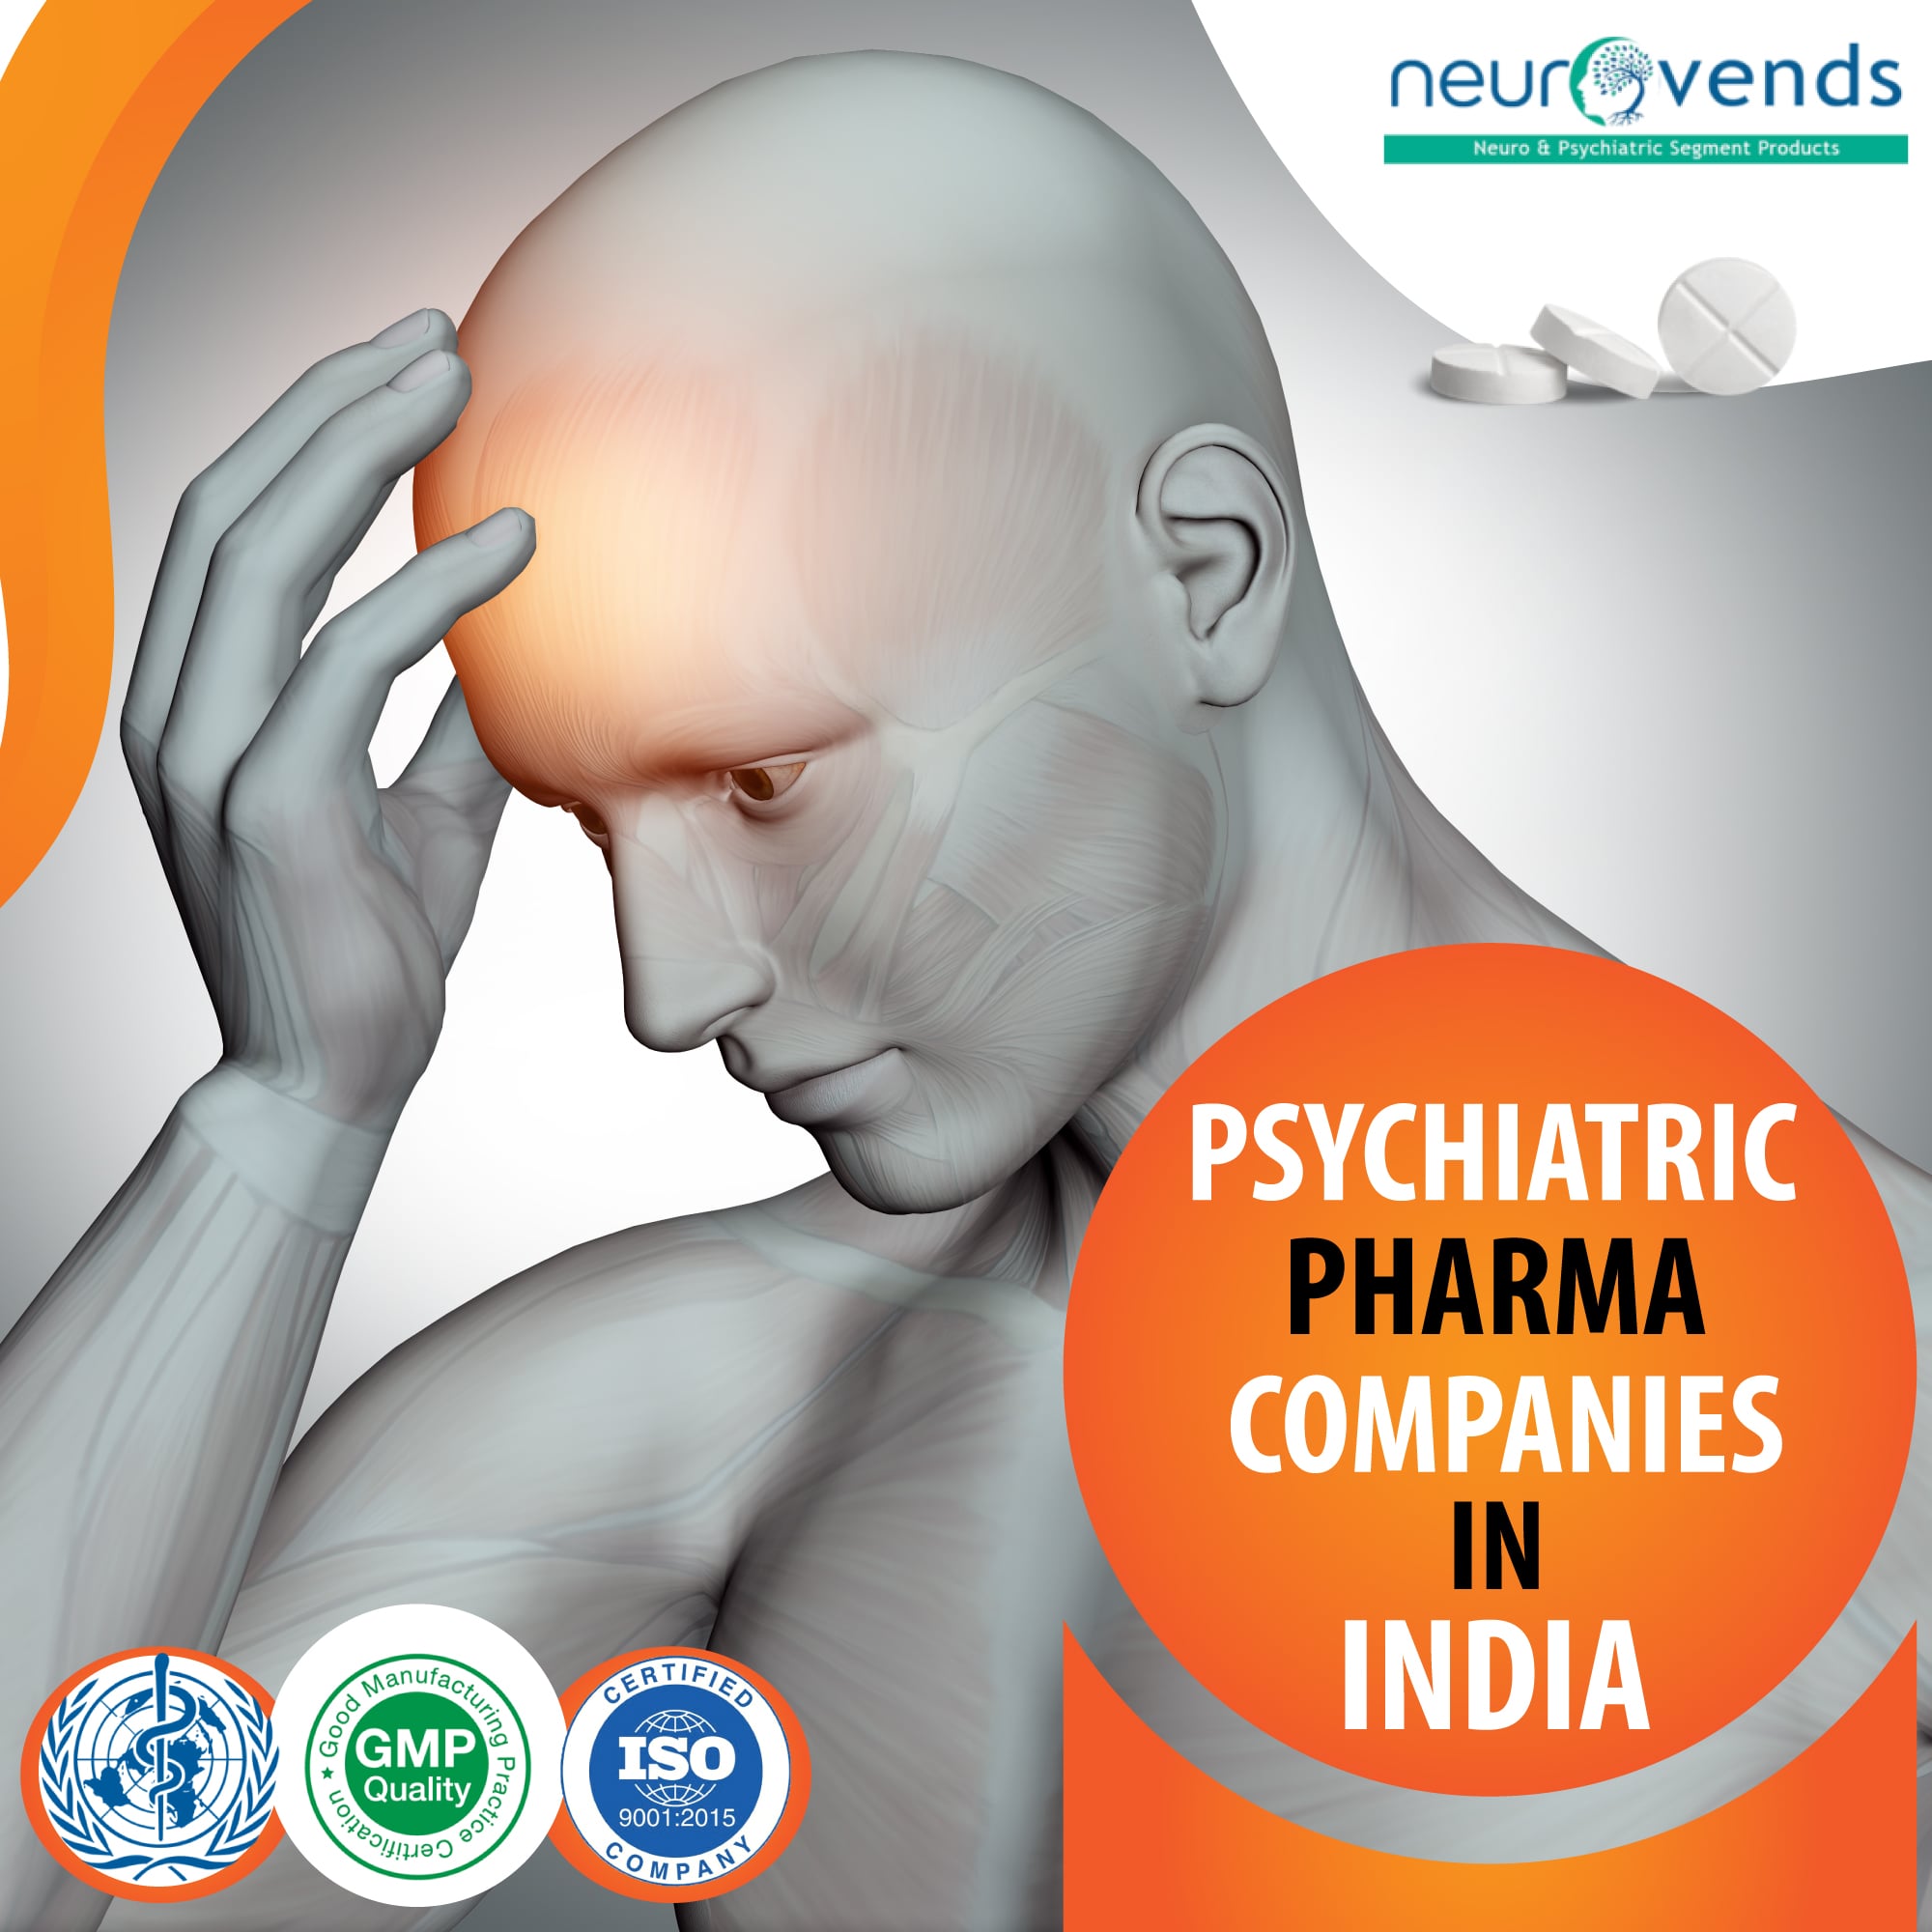 Top Pharma Companies in Psychiatry in India